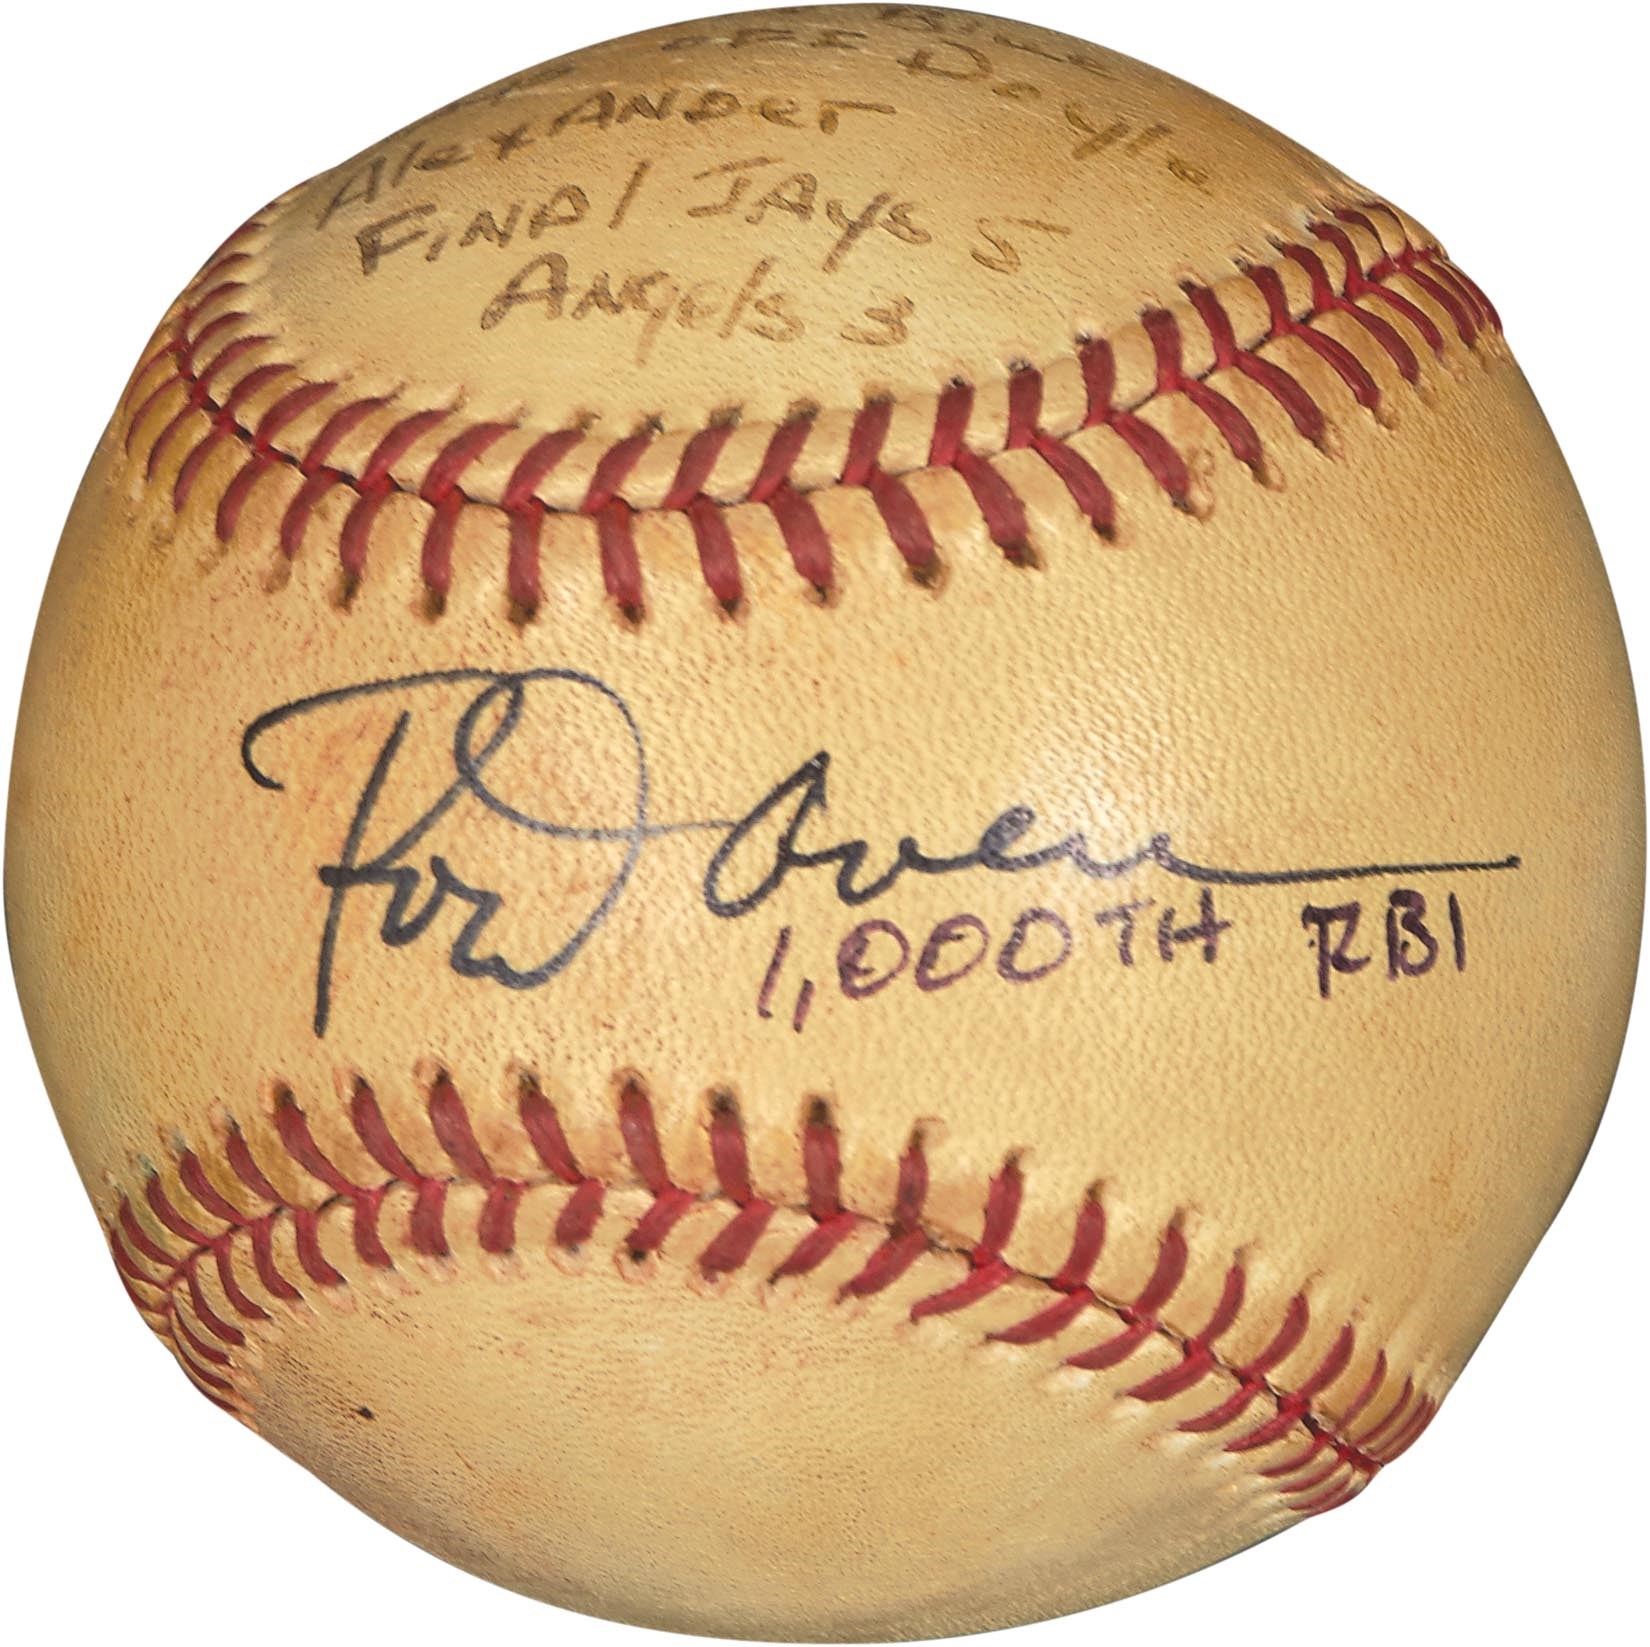 - 1985 Rod Carew 1,000th Career RBI Baseball (PSA)